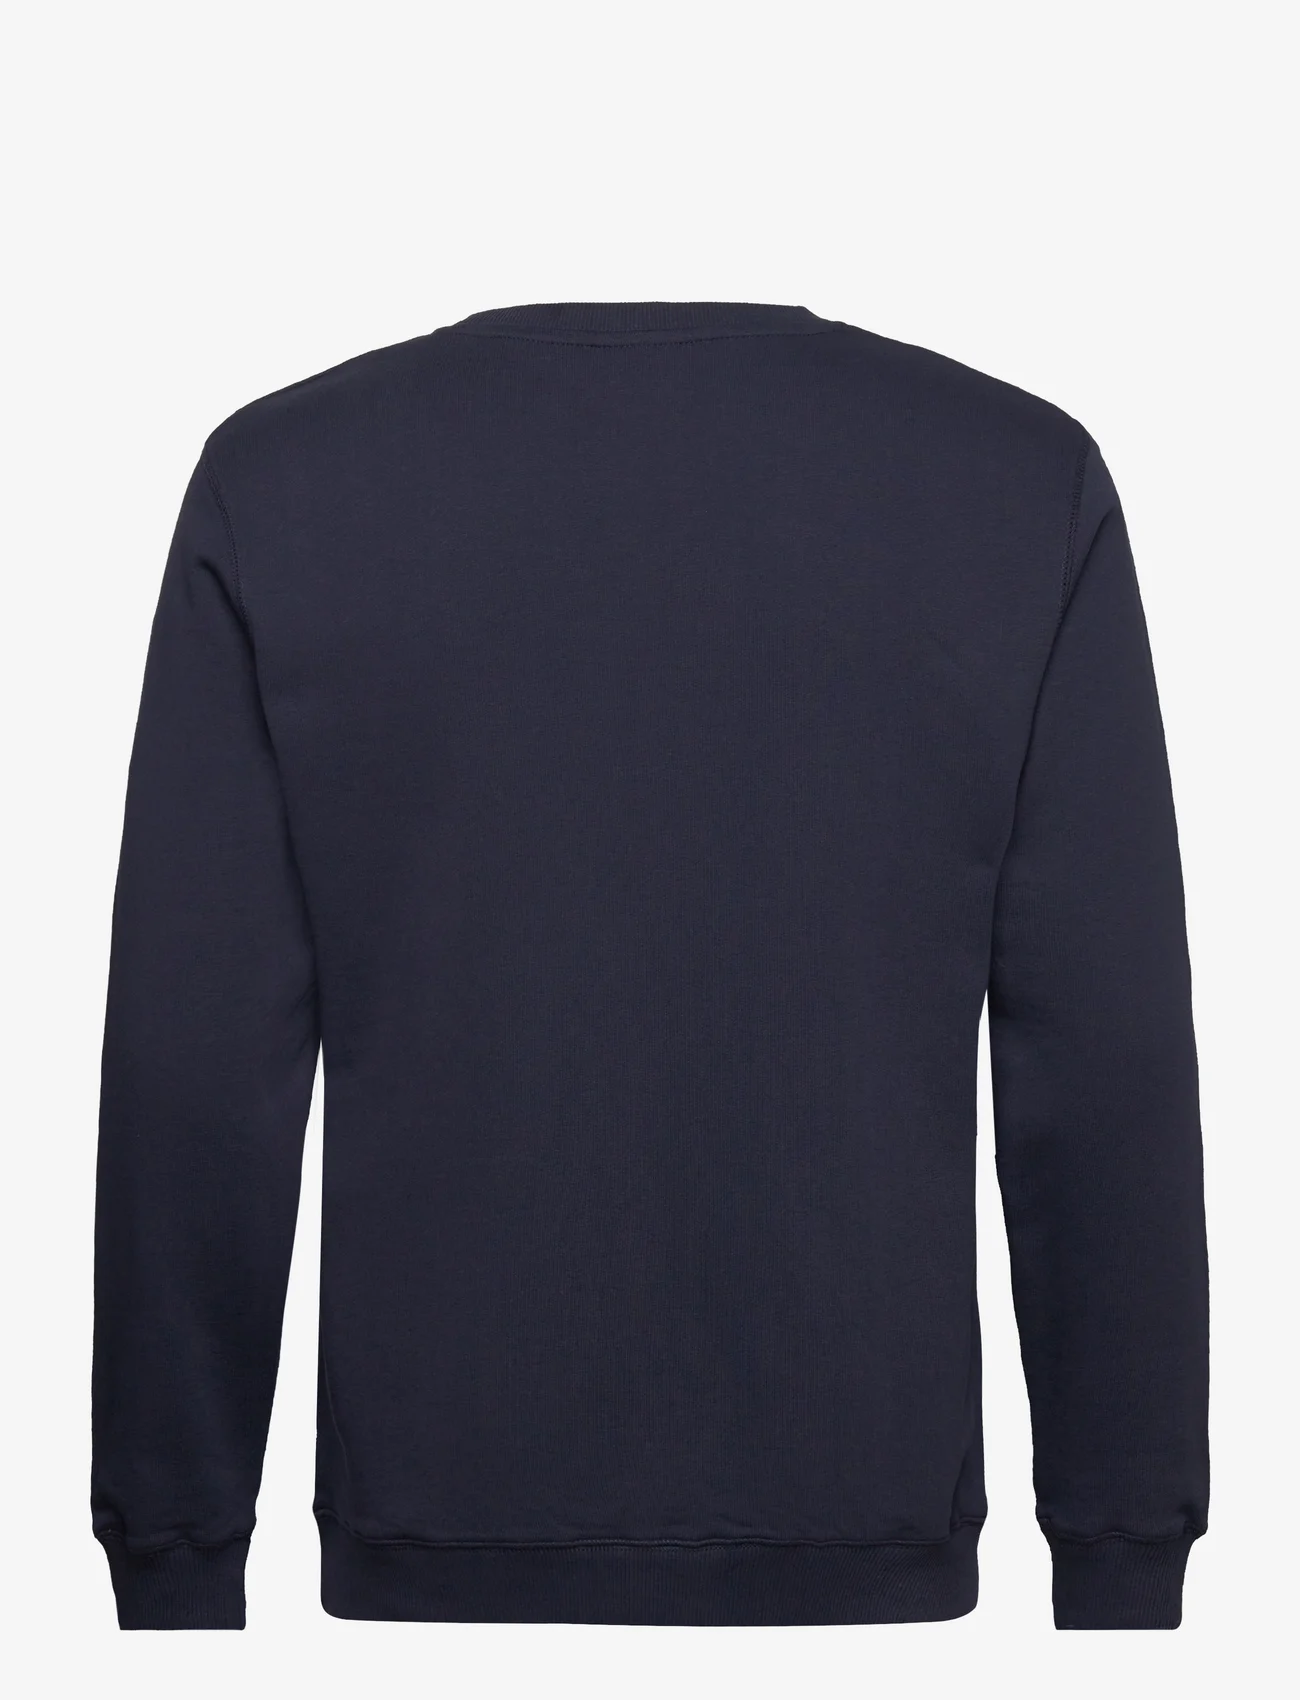 Makia - Square Pocket Sweatshirt - truien en hoodies - dark navy - 1